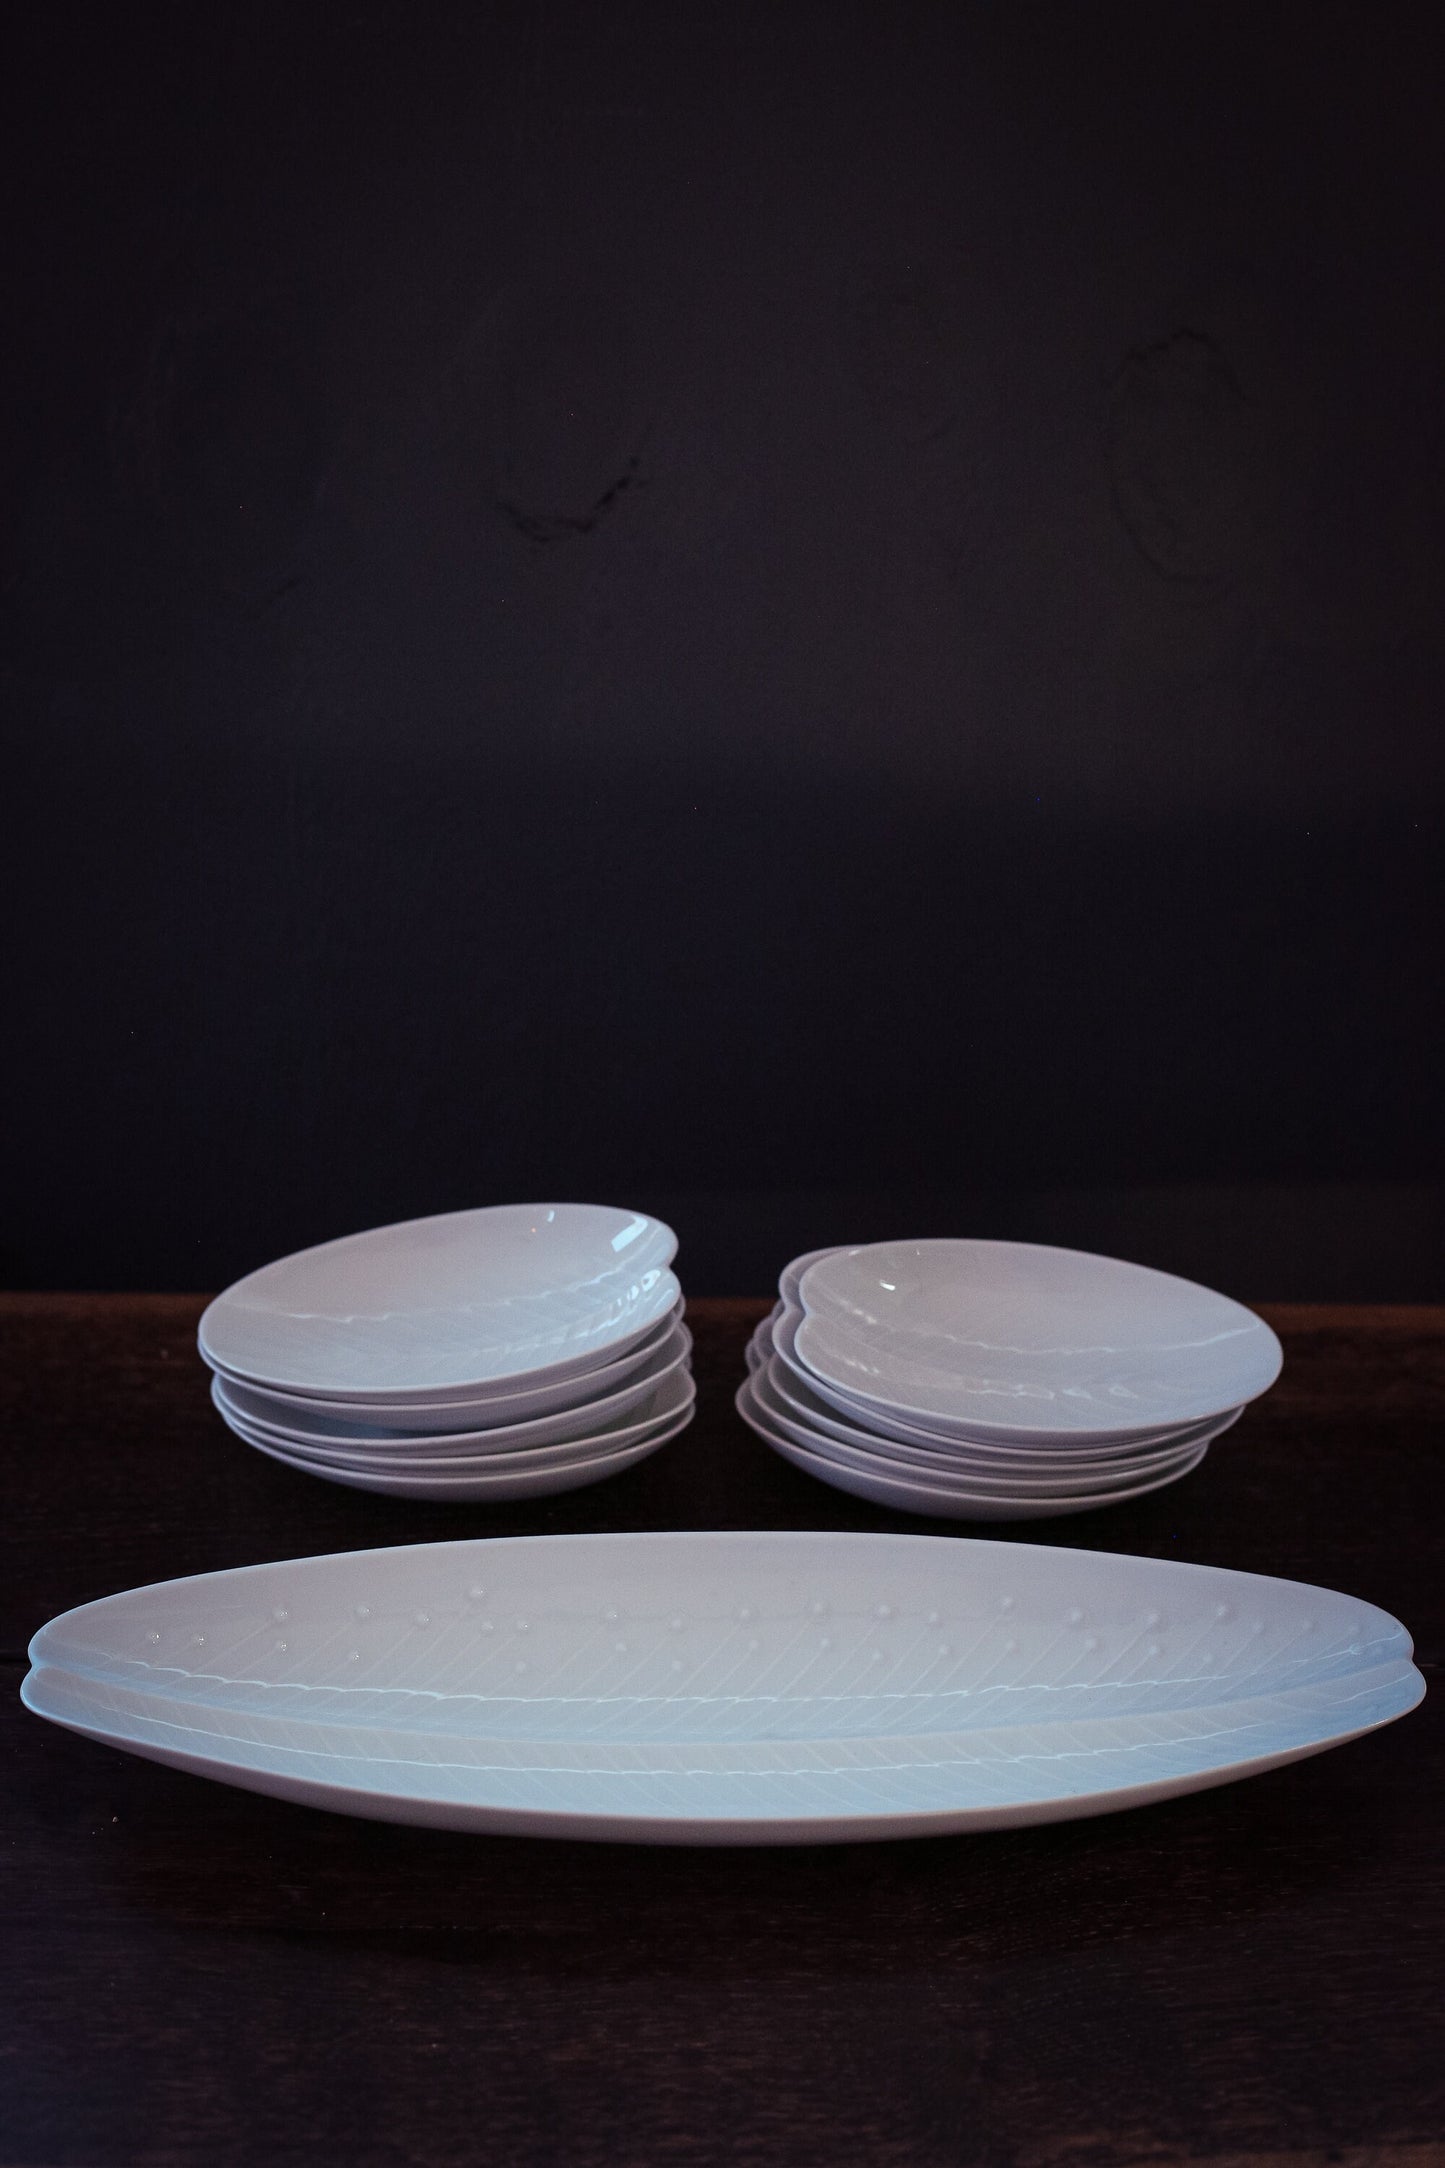 Tapio Wirkkala by Rosenthal German Porcelain set includes Platter and 10 plates - Vintage Set of Rosenthal Tapio Wirkkala Serving Pieces